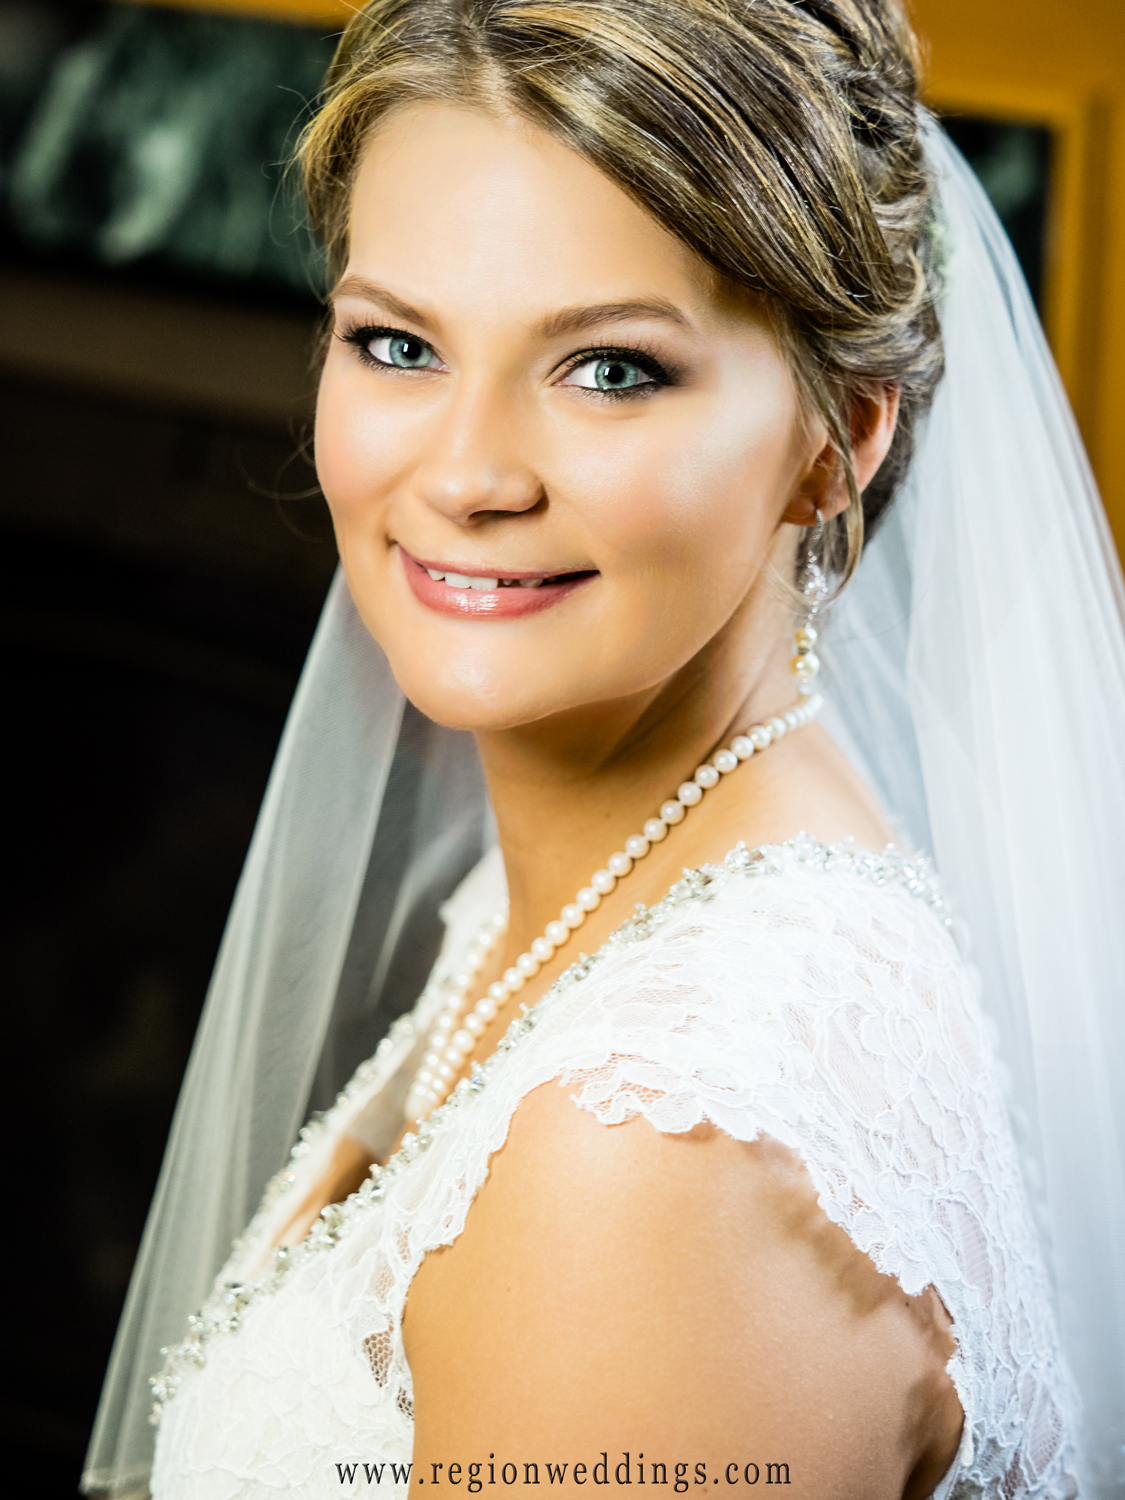 Northwest Indiana Modern and Candid Wedding Photographer — Region Weddings